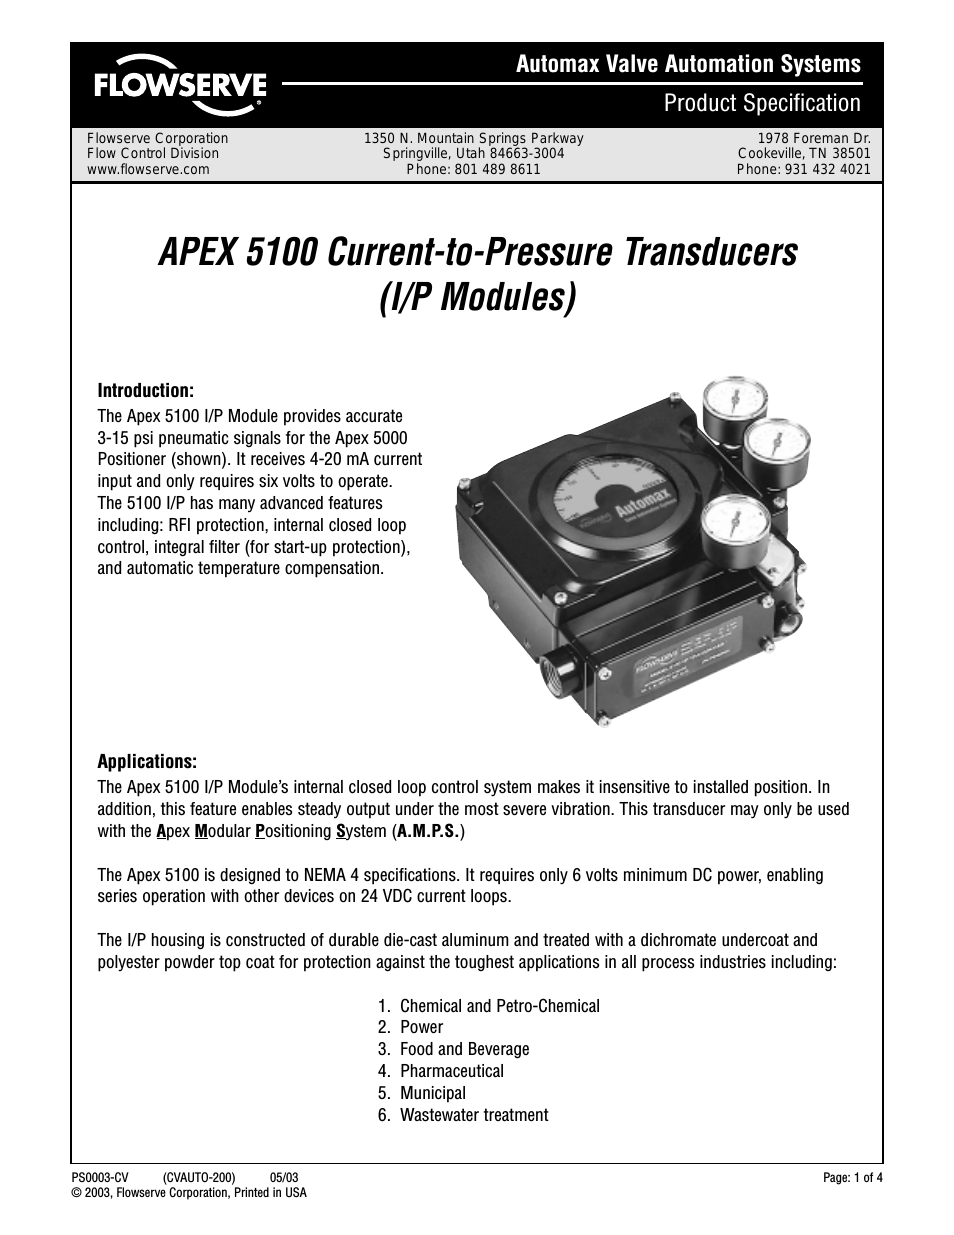 APEX 5100 Current-to-Pressure Transducers